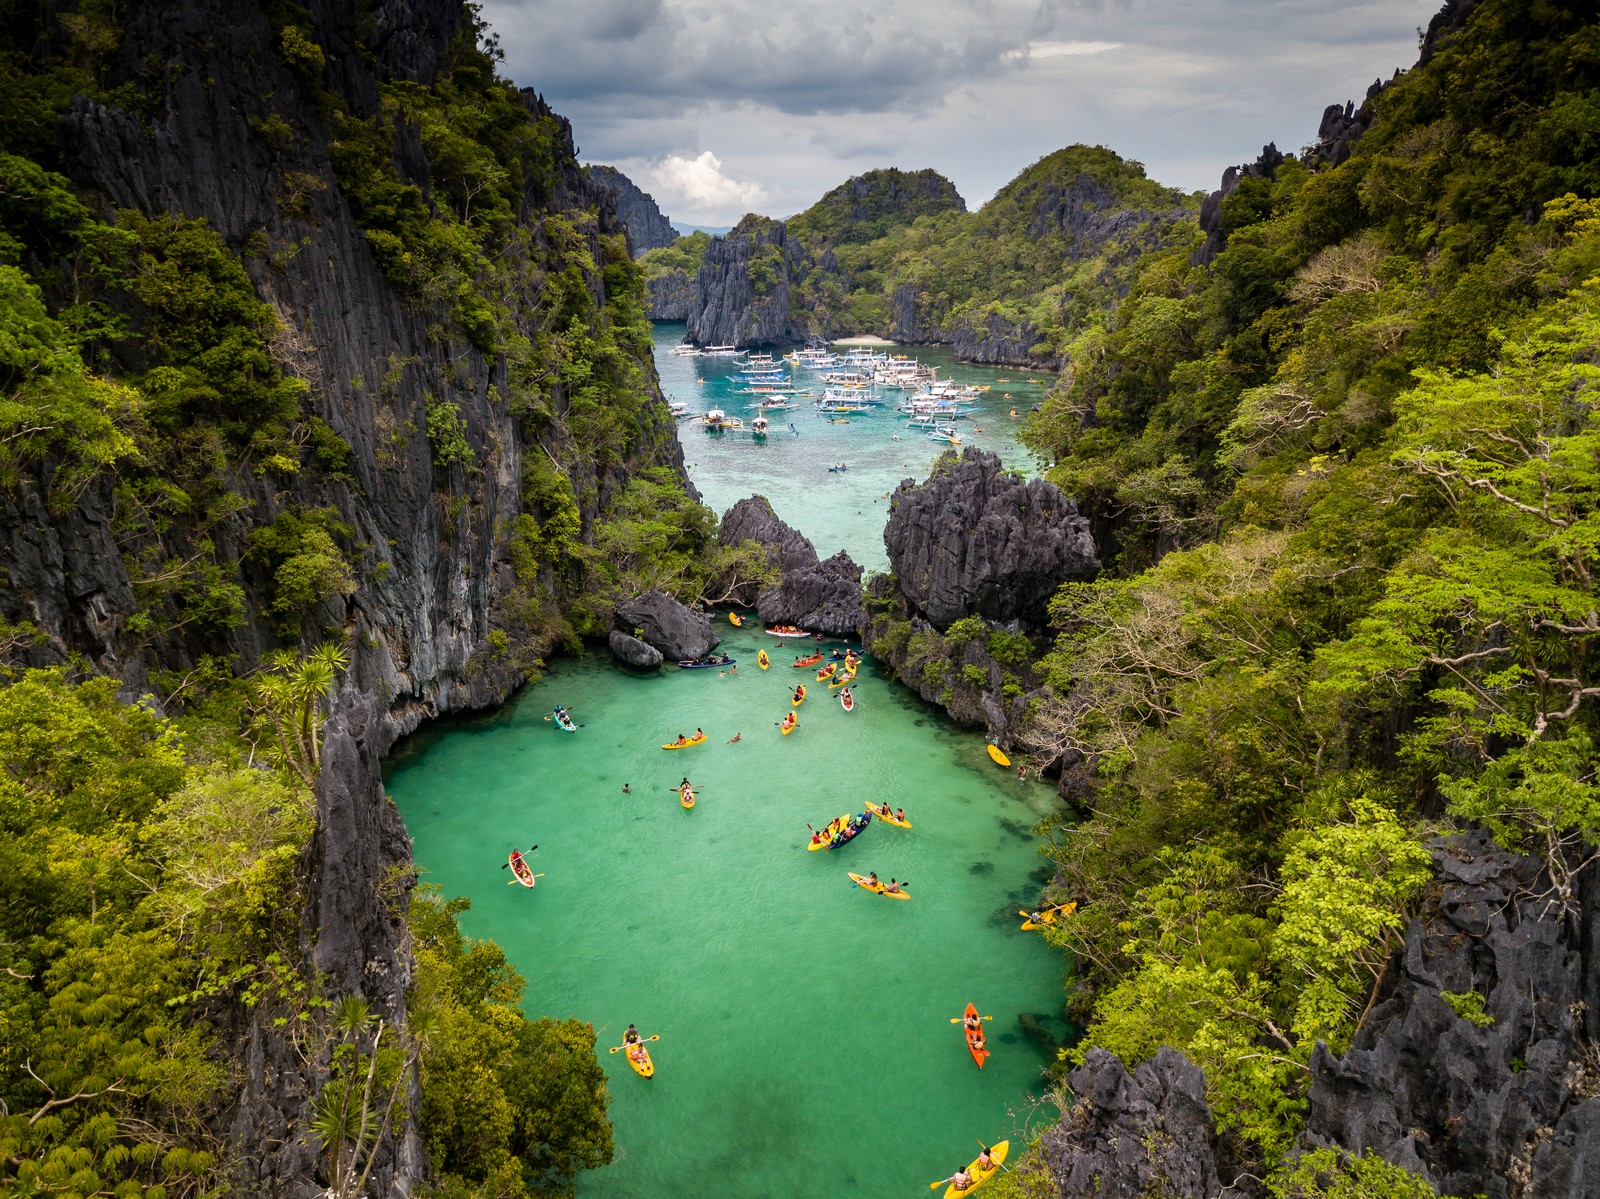 philippines has many beautiful tourist spots